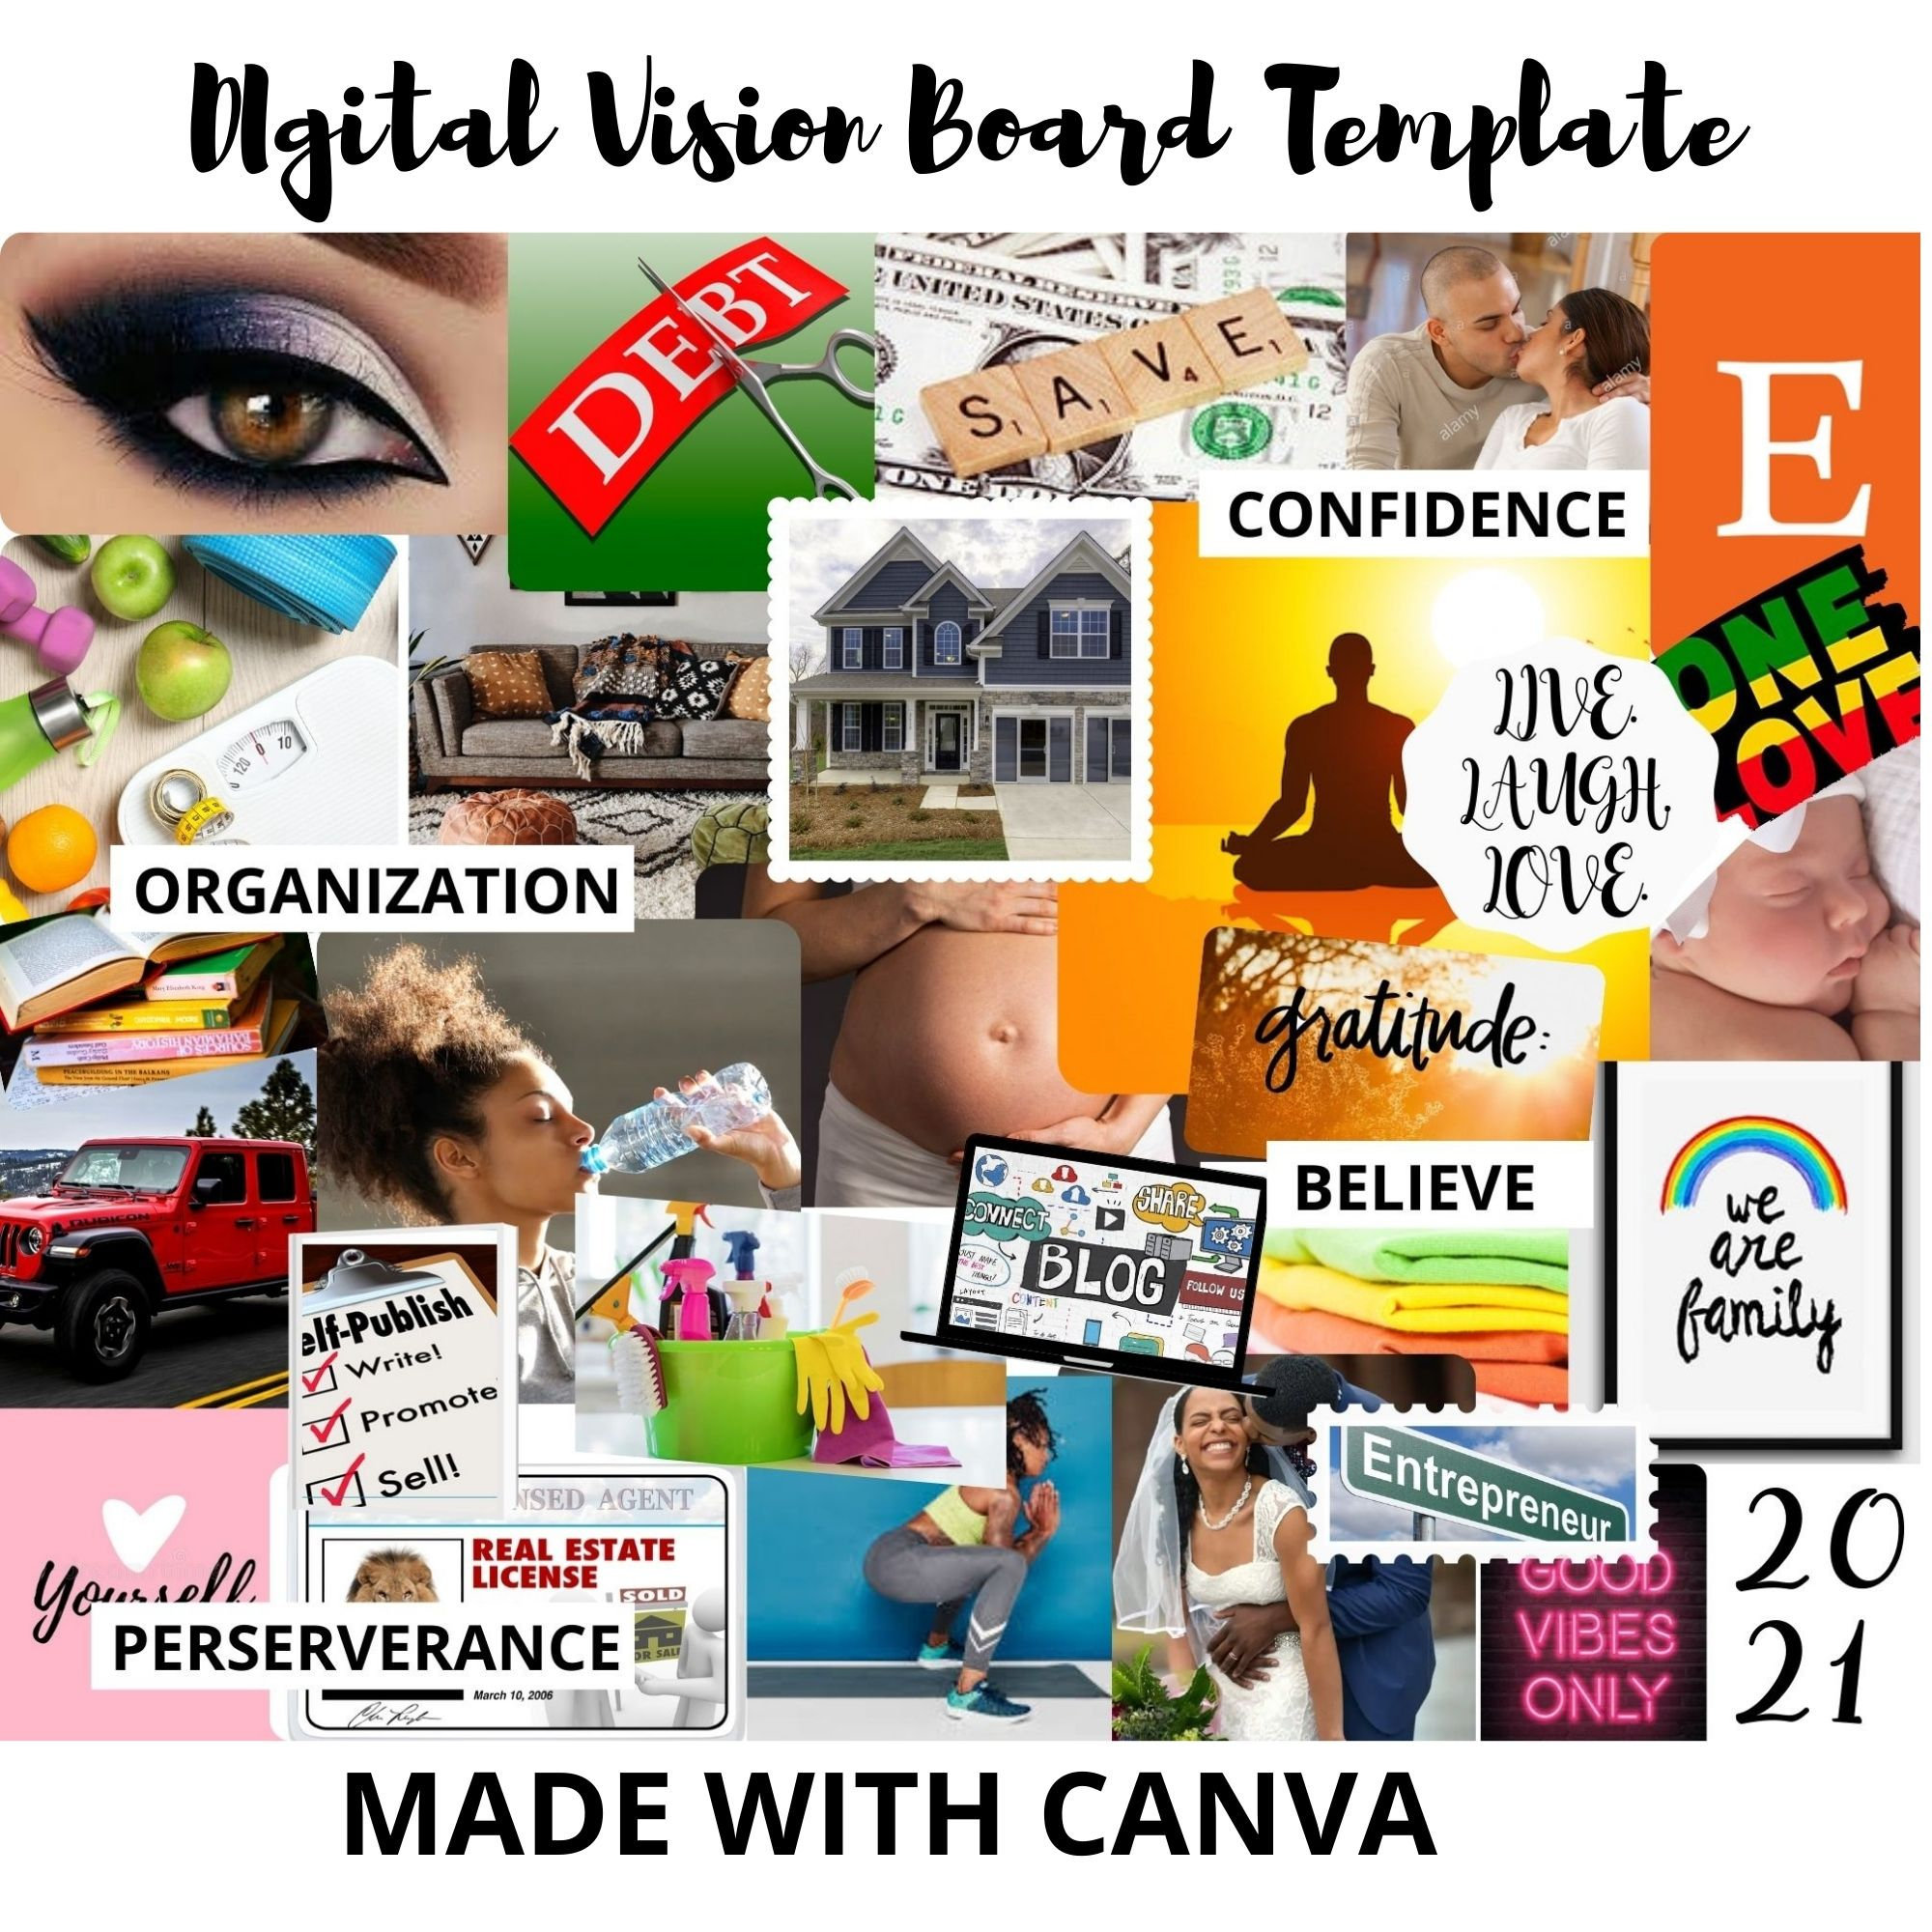 Digital Vision Board Template for Canva Online Vision Board | Etsy